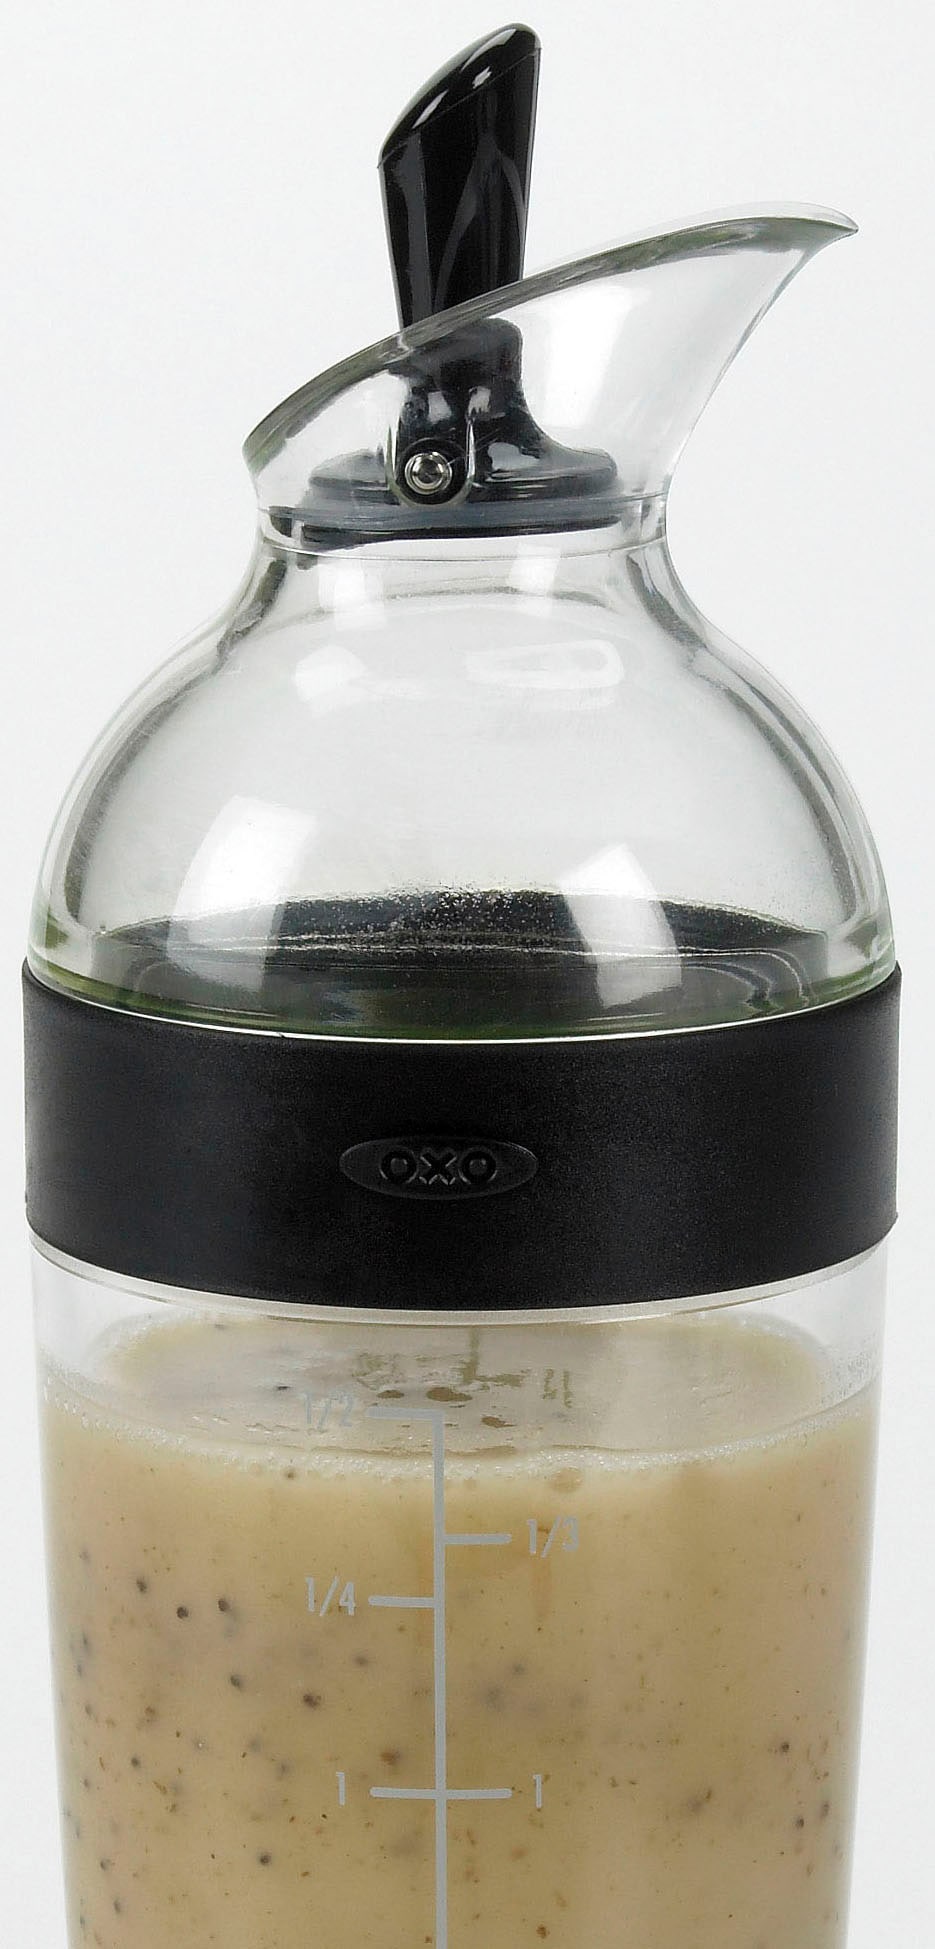 Salatdressing, Shaker, Dressing OXO kaufen bequem 350 Good ml Grips für